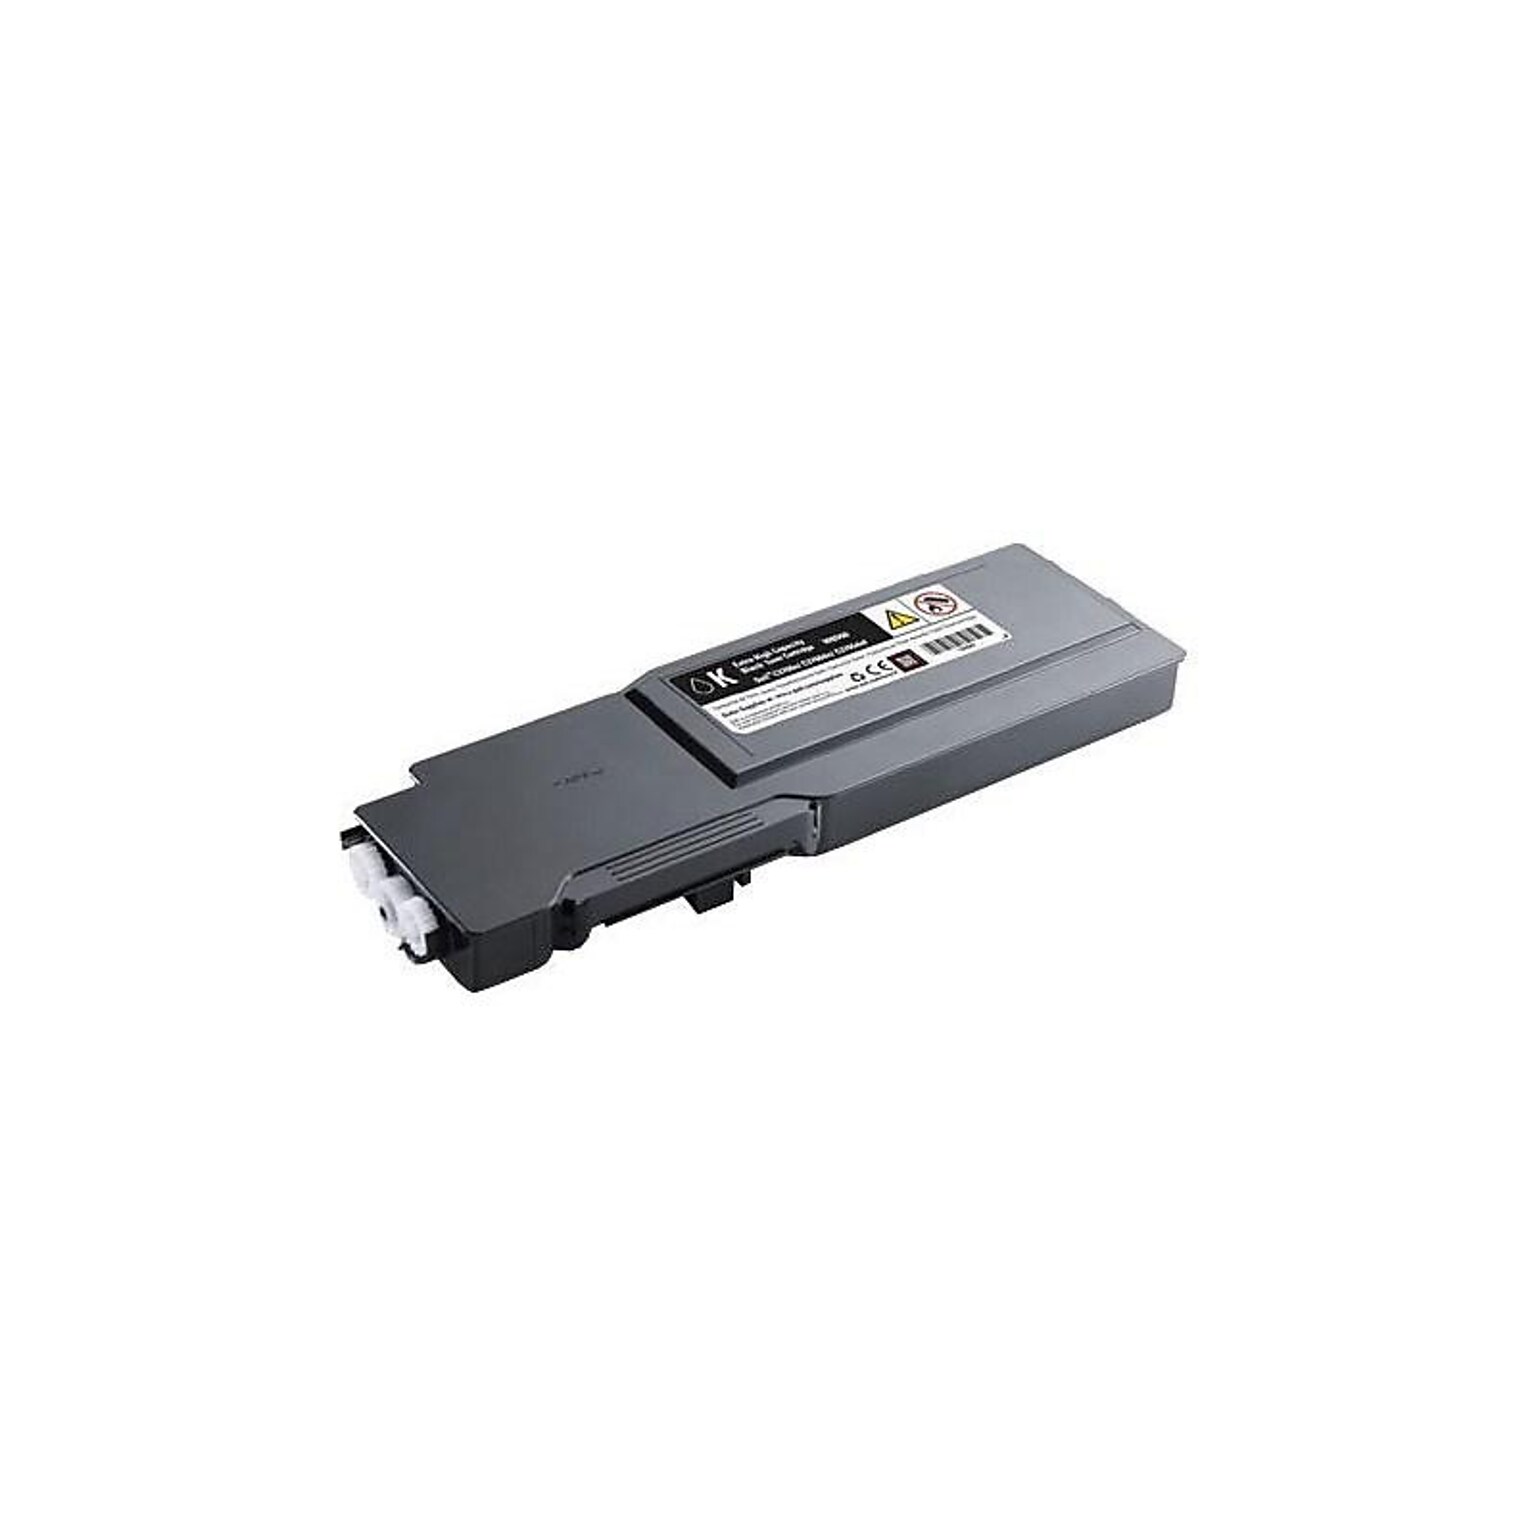 Dell W8D60 Black Extra High Yield Toner Cartridge